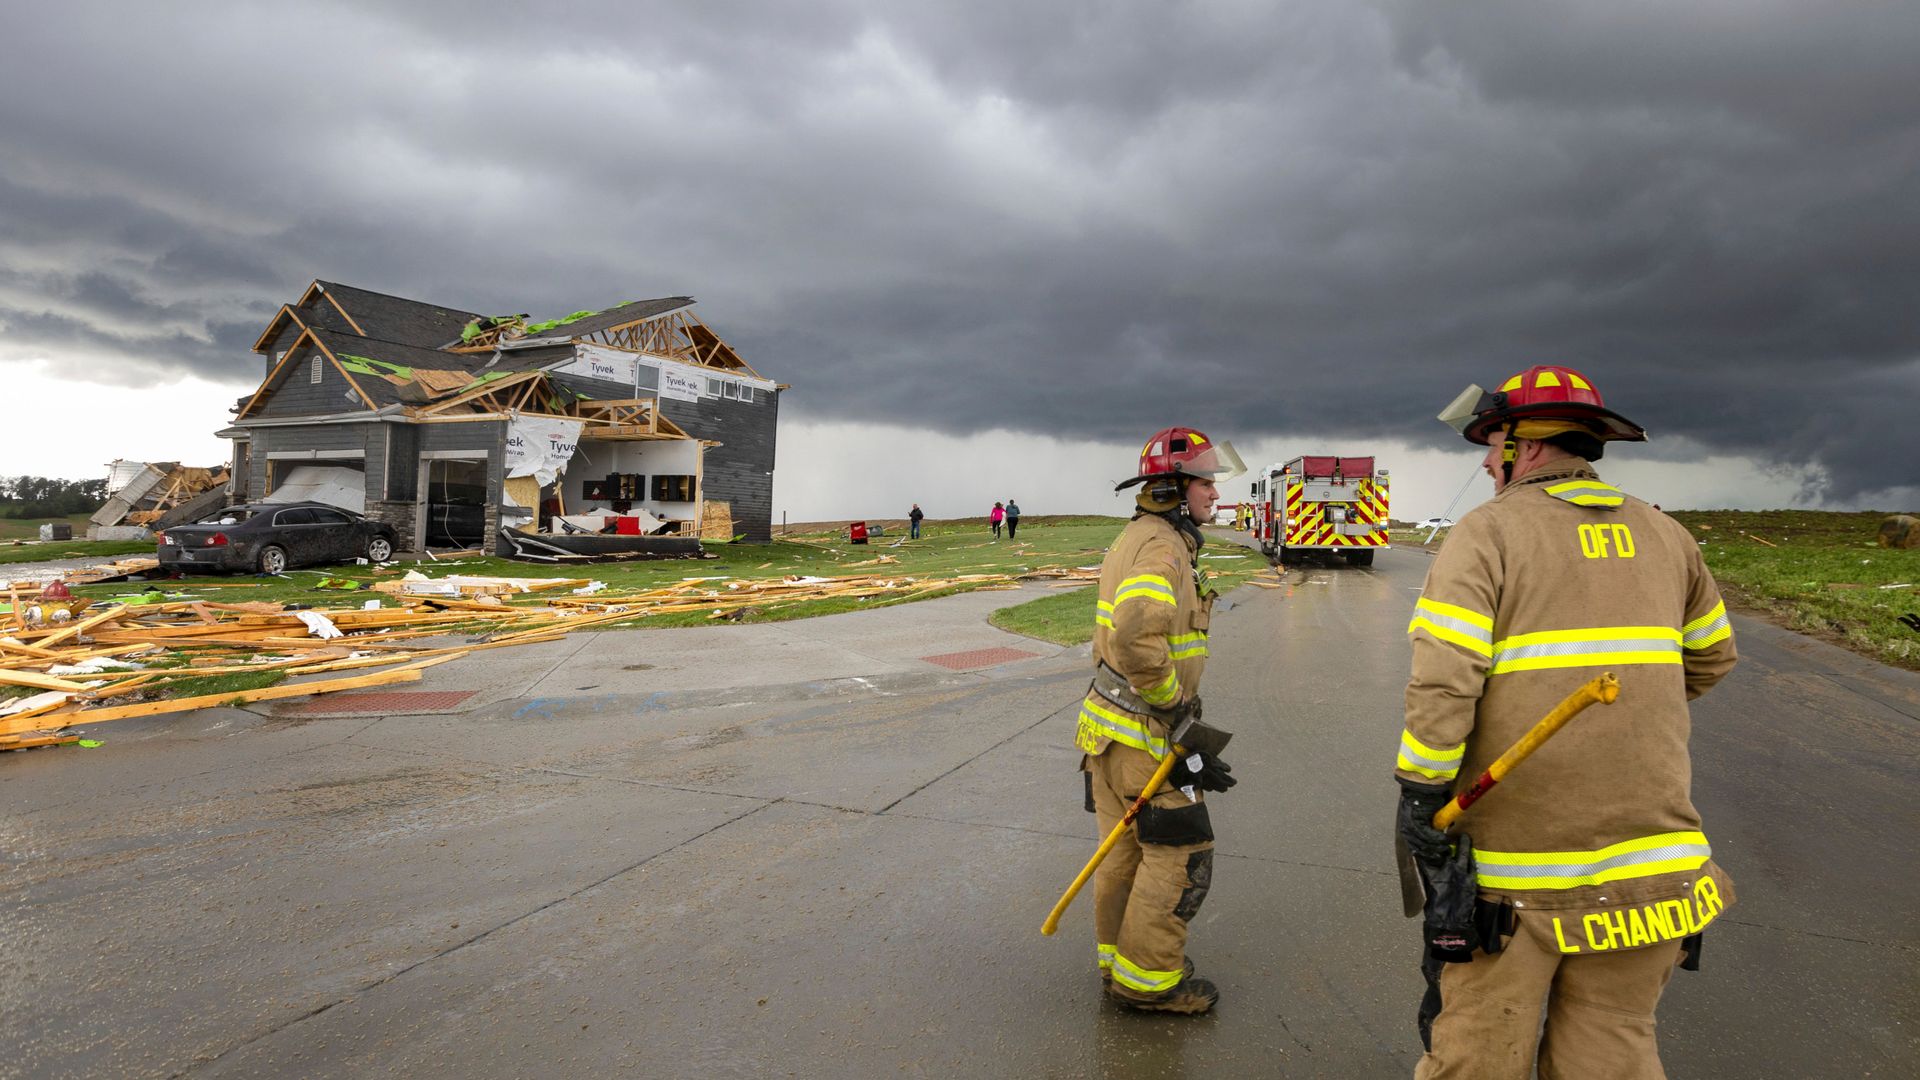 Hundreds of homes damaged after tornado smashes through Nebraska